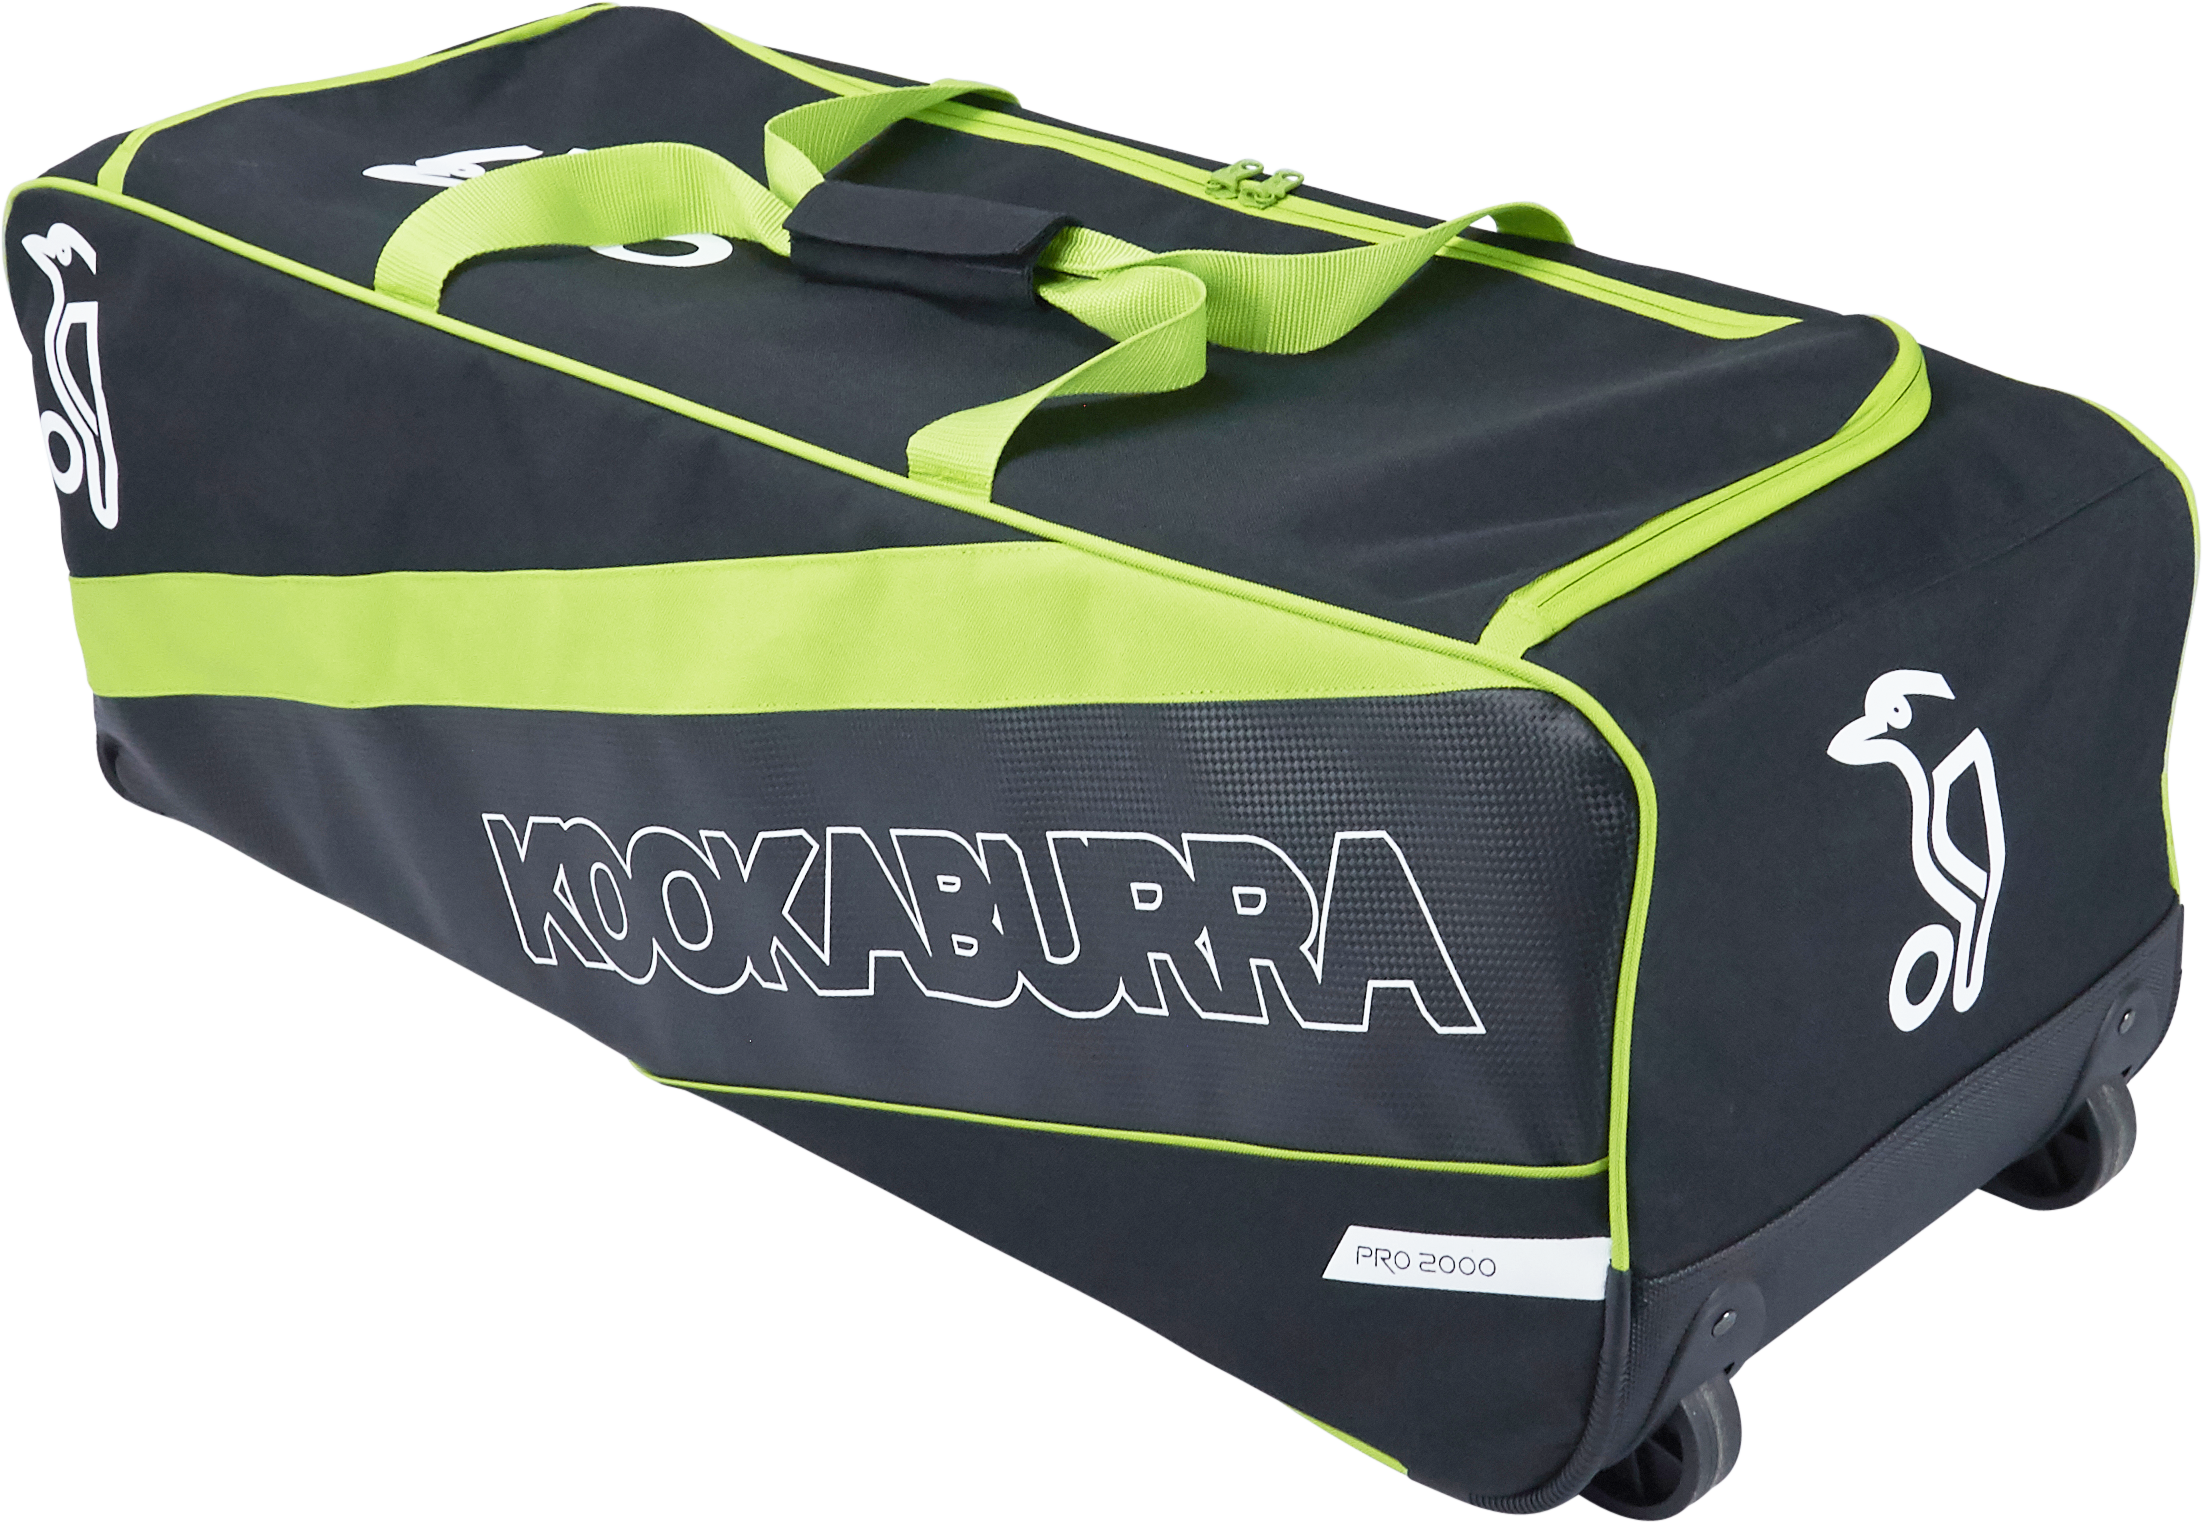 KOOKABURRA PRO 2000 Wheelie Bag